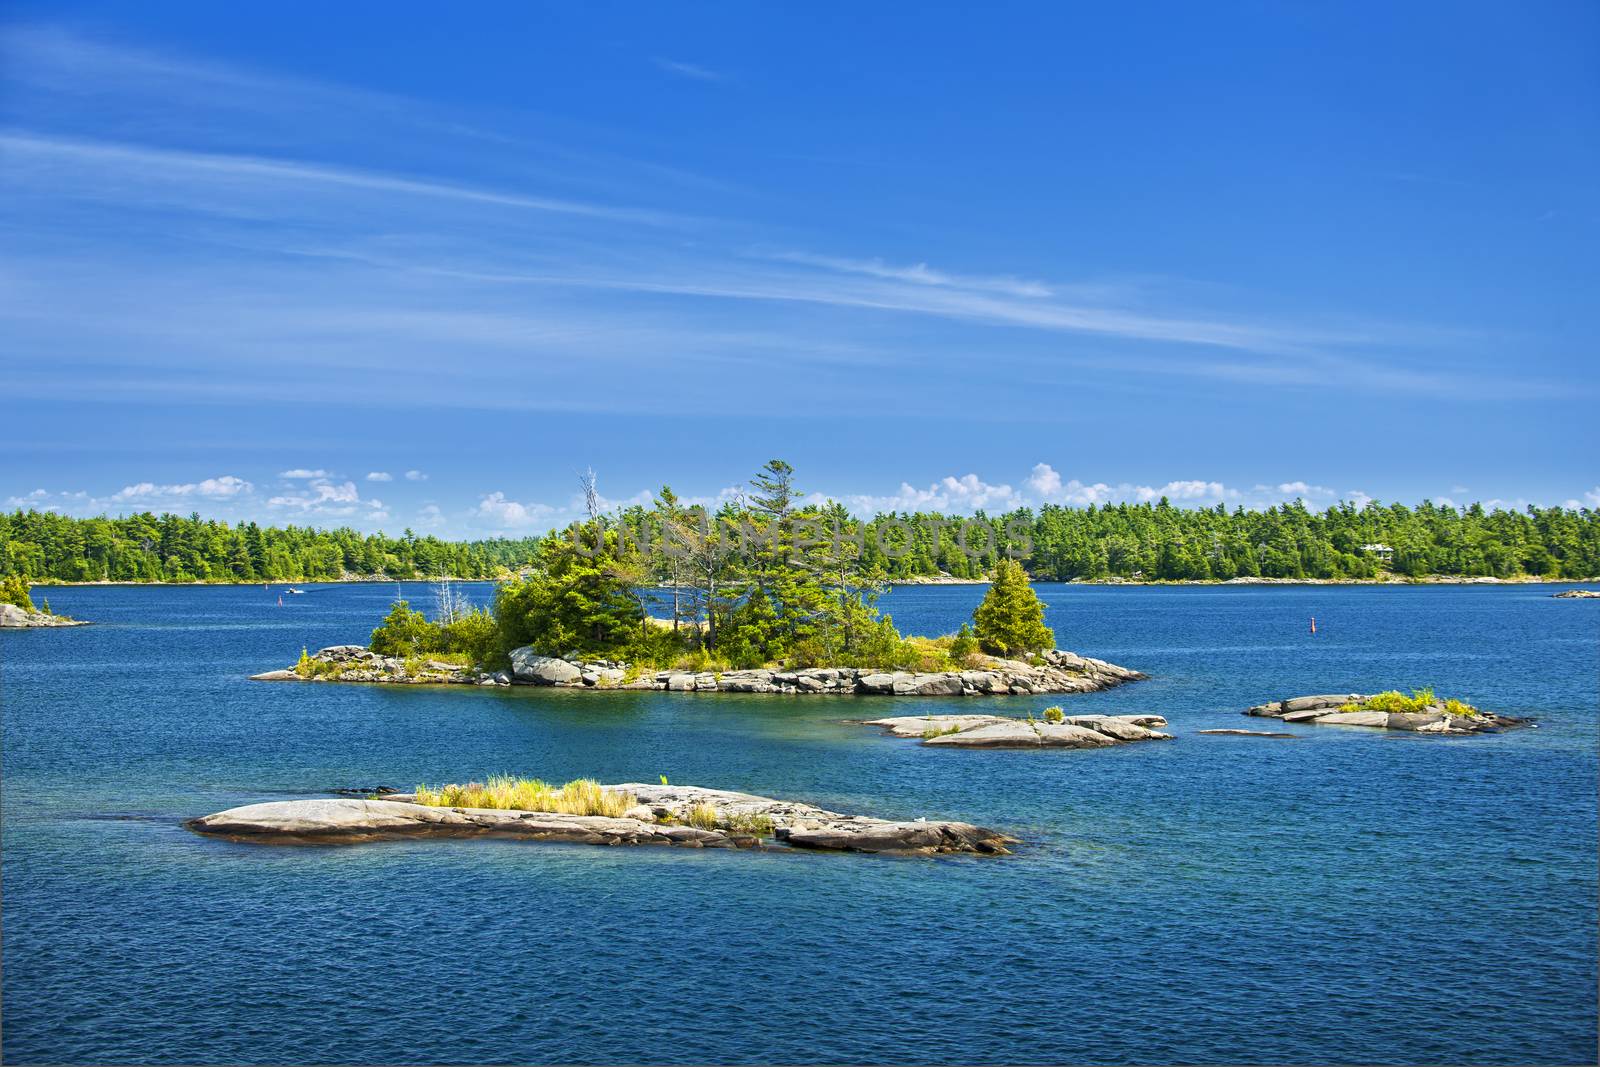 Small rocky islands in Georgian Bay near Parry Sound, Ontario Canada